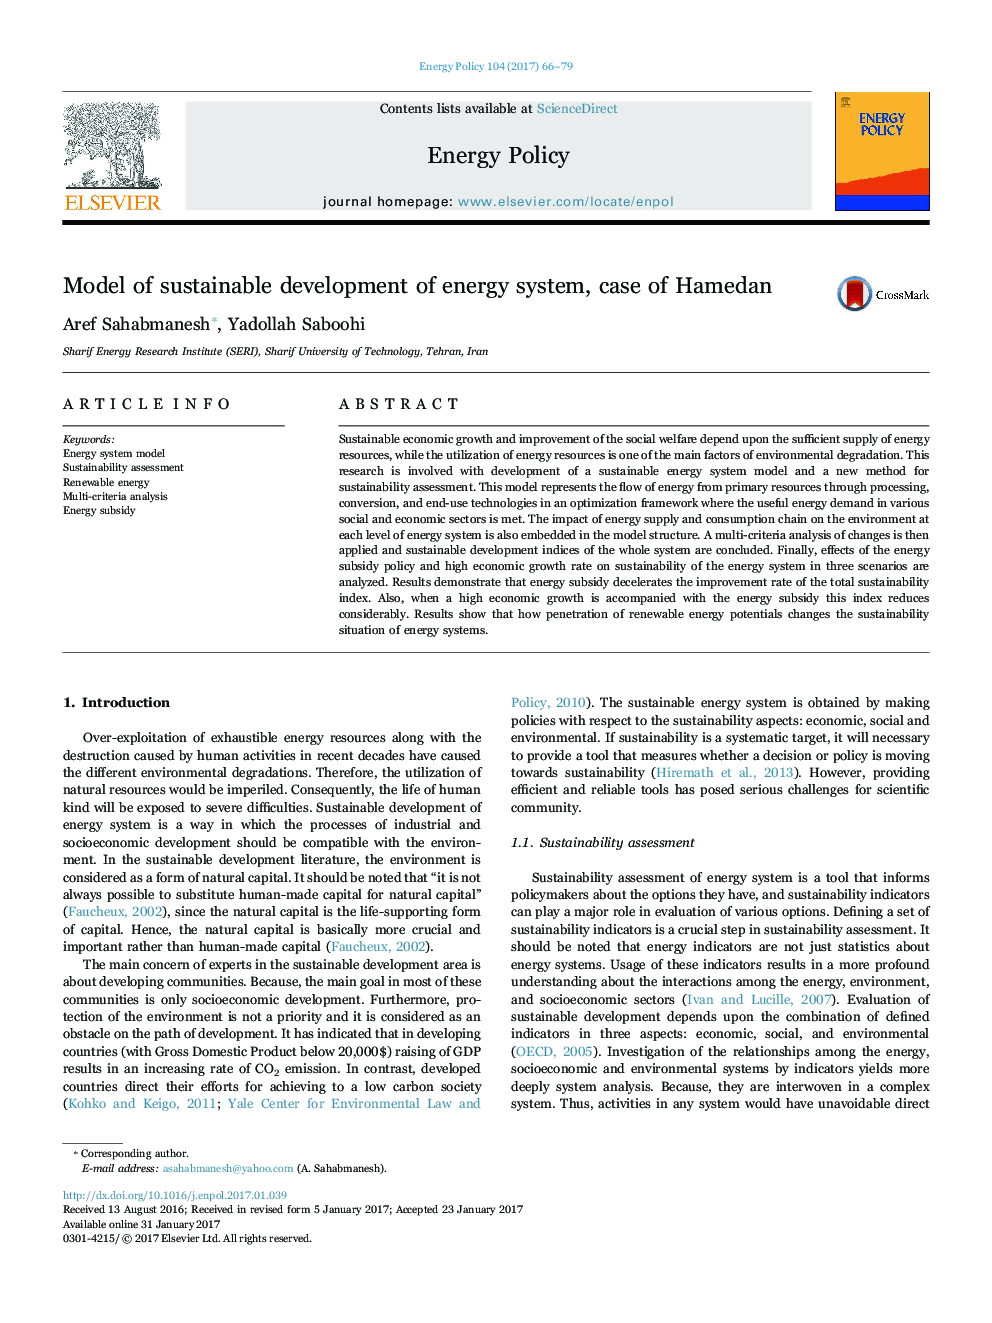 Model of sustainable development of energy system, case of Hamedan